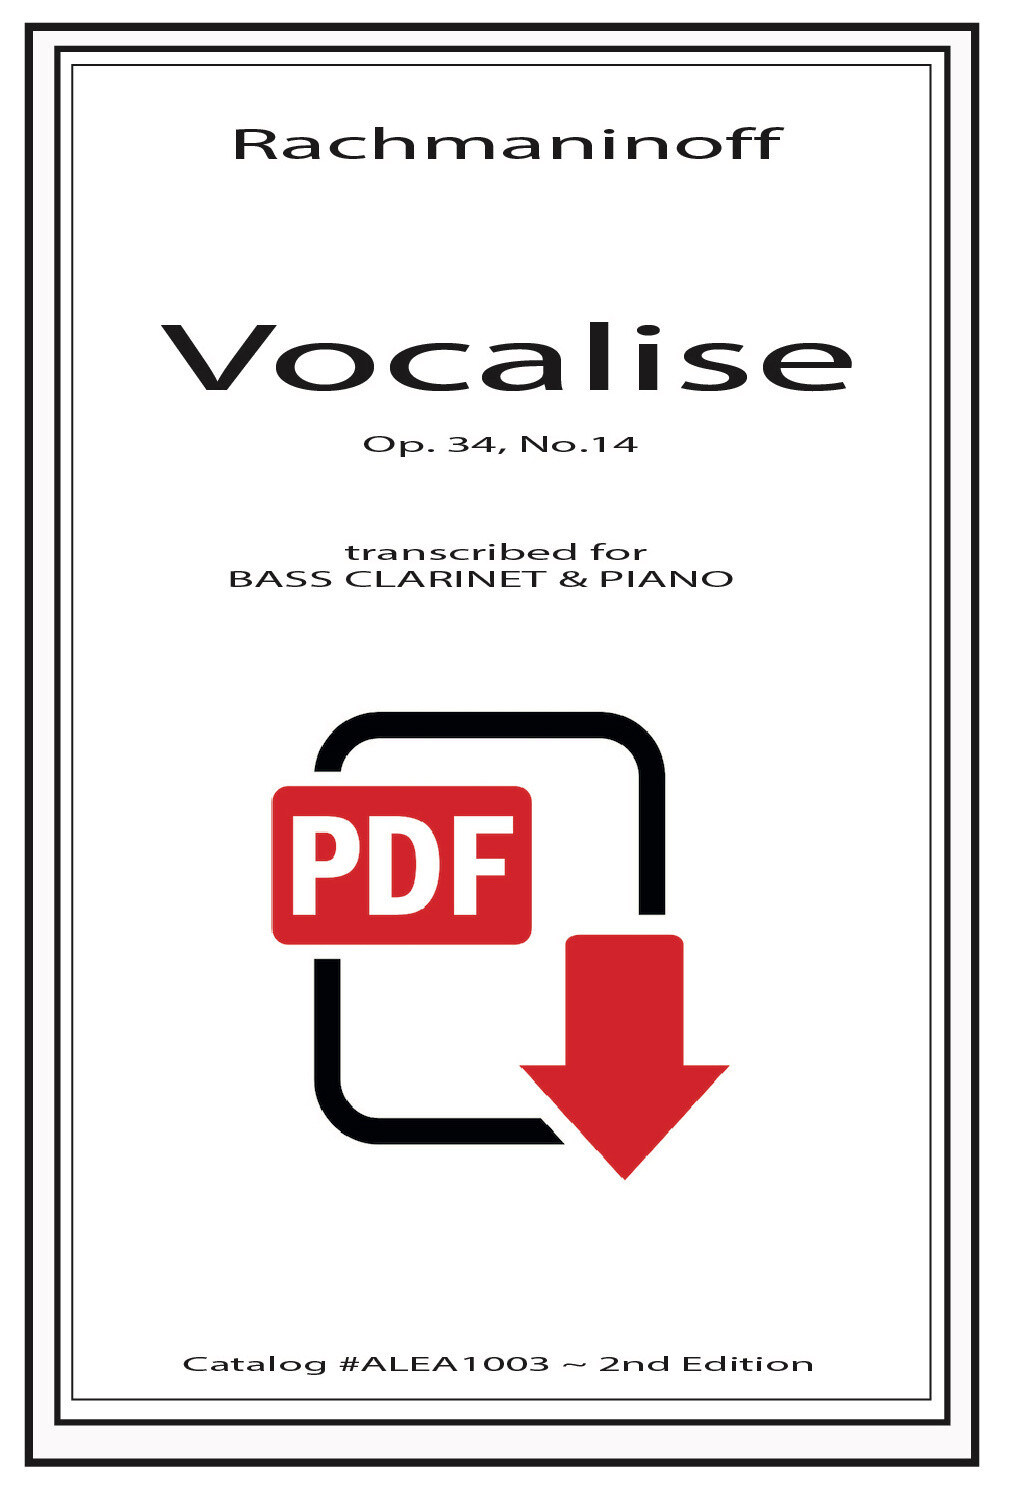 Rachmaninoff: Vocalise (PDF)